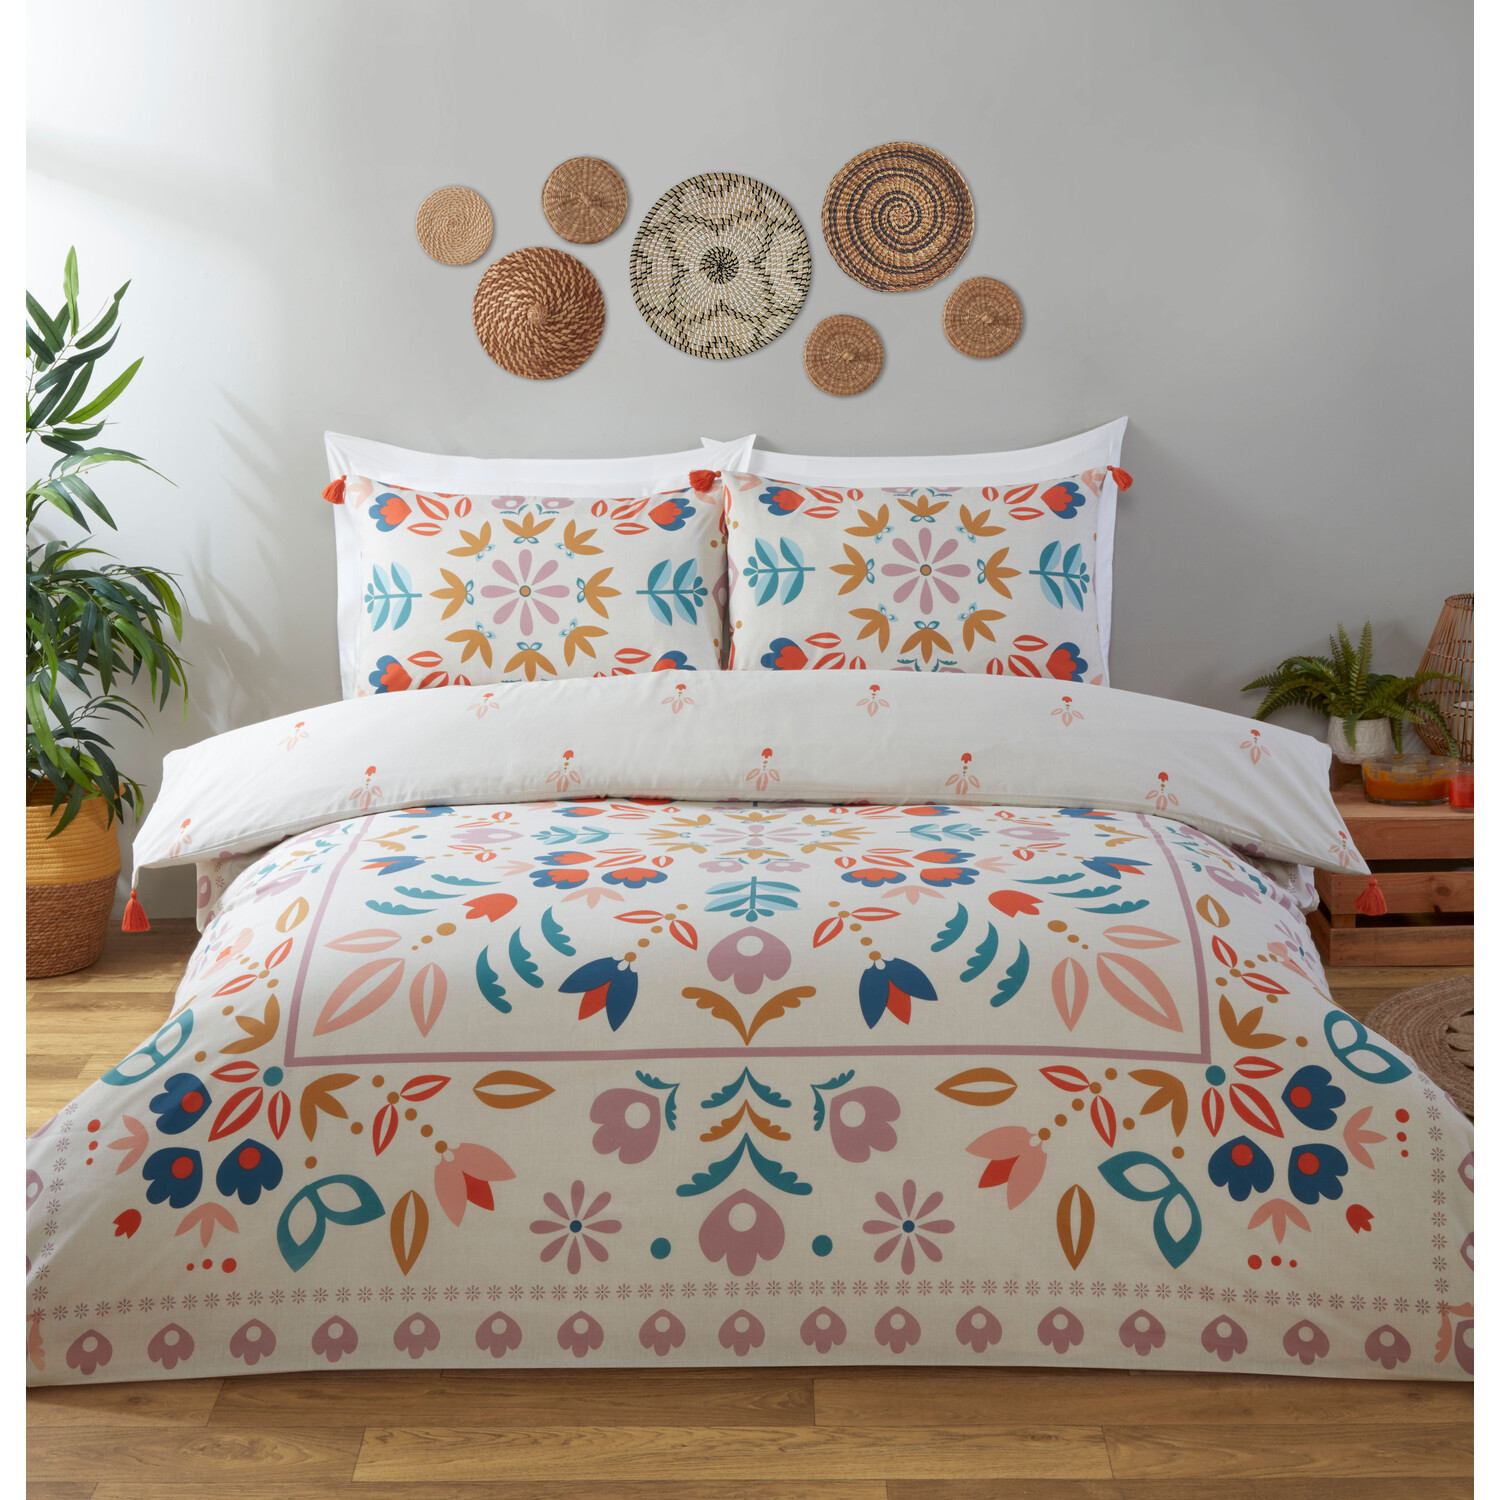 Amari Floral Duvet Cover and Pillowcase Set - Superking Image 1